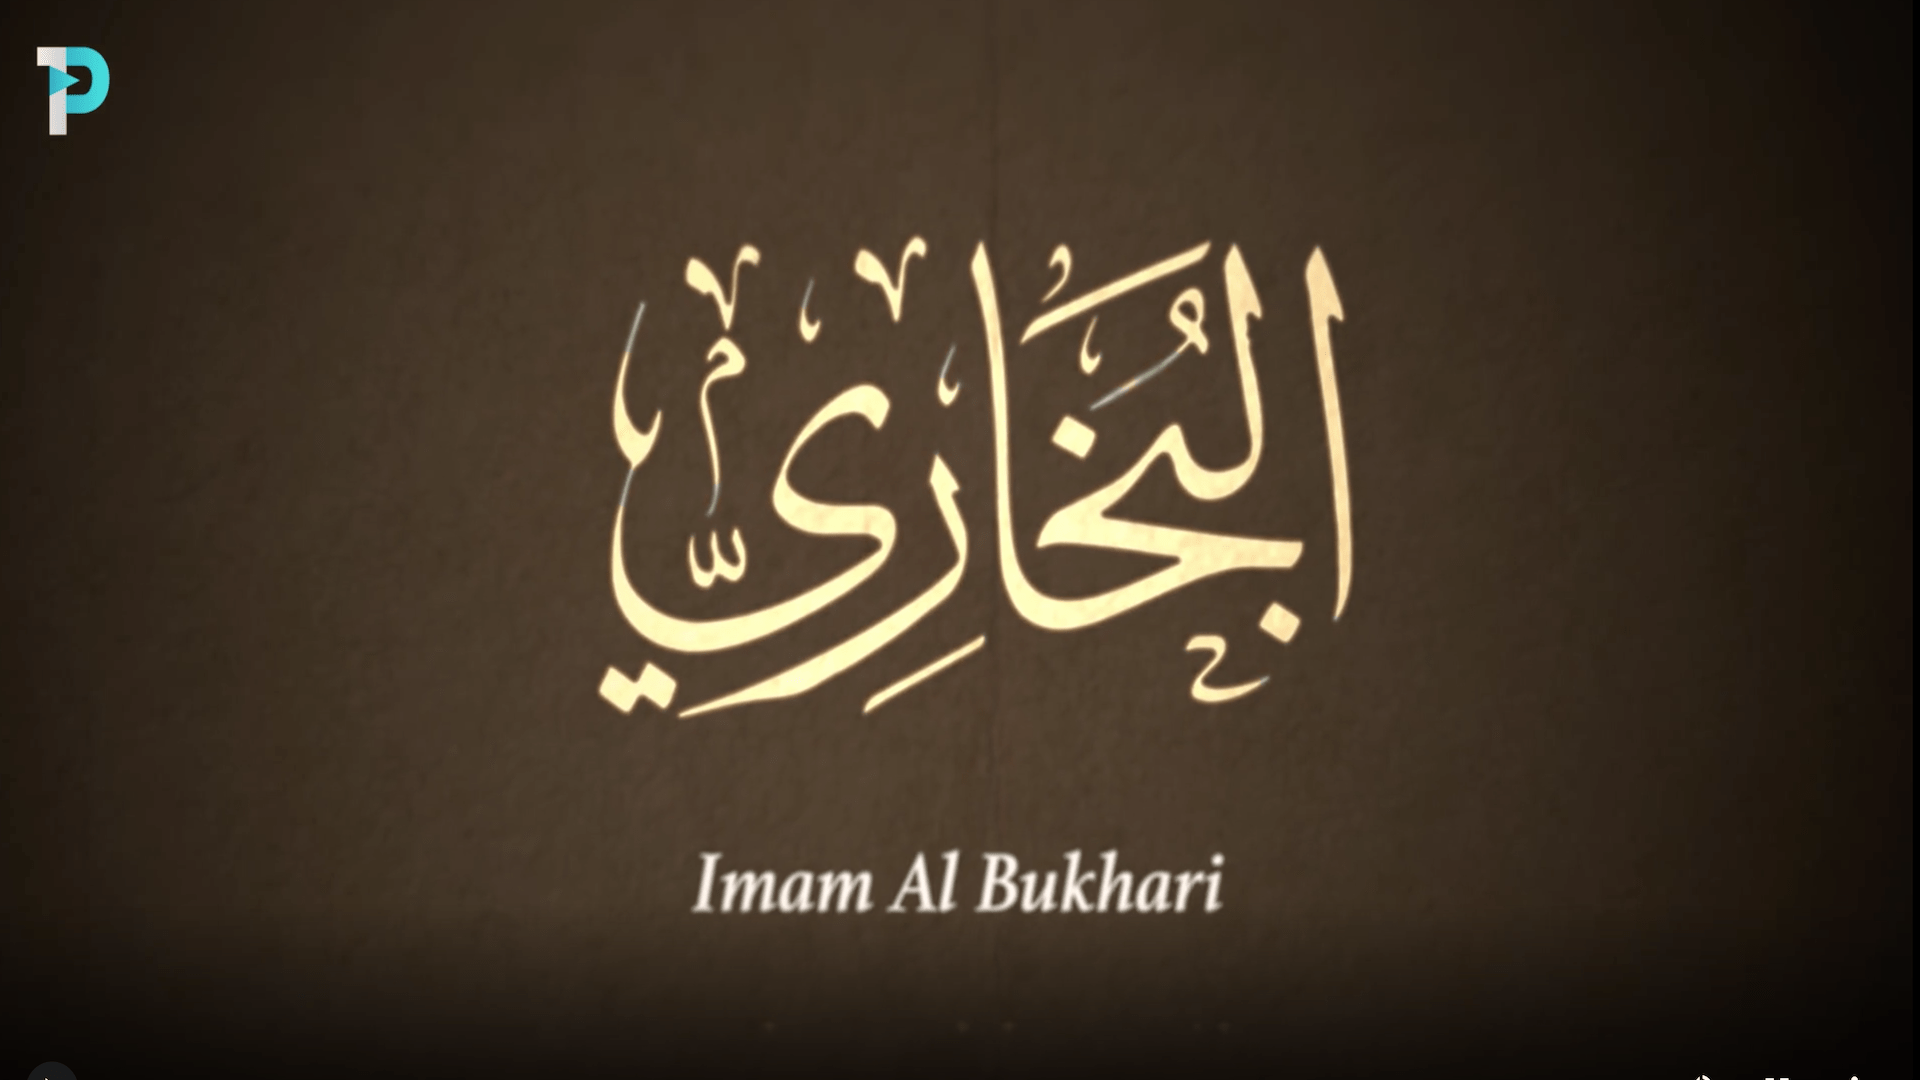 The life of Imam Al-Bukhari